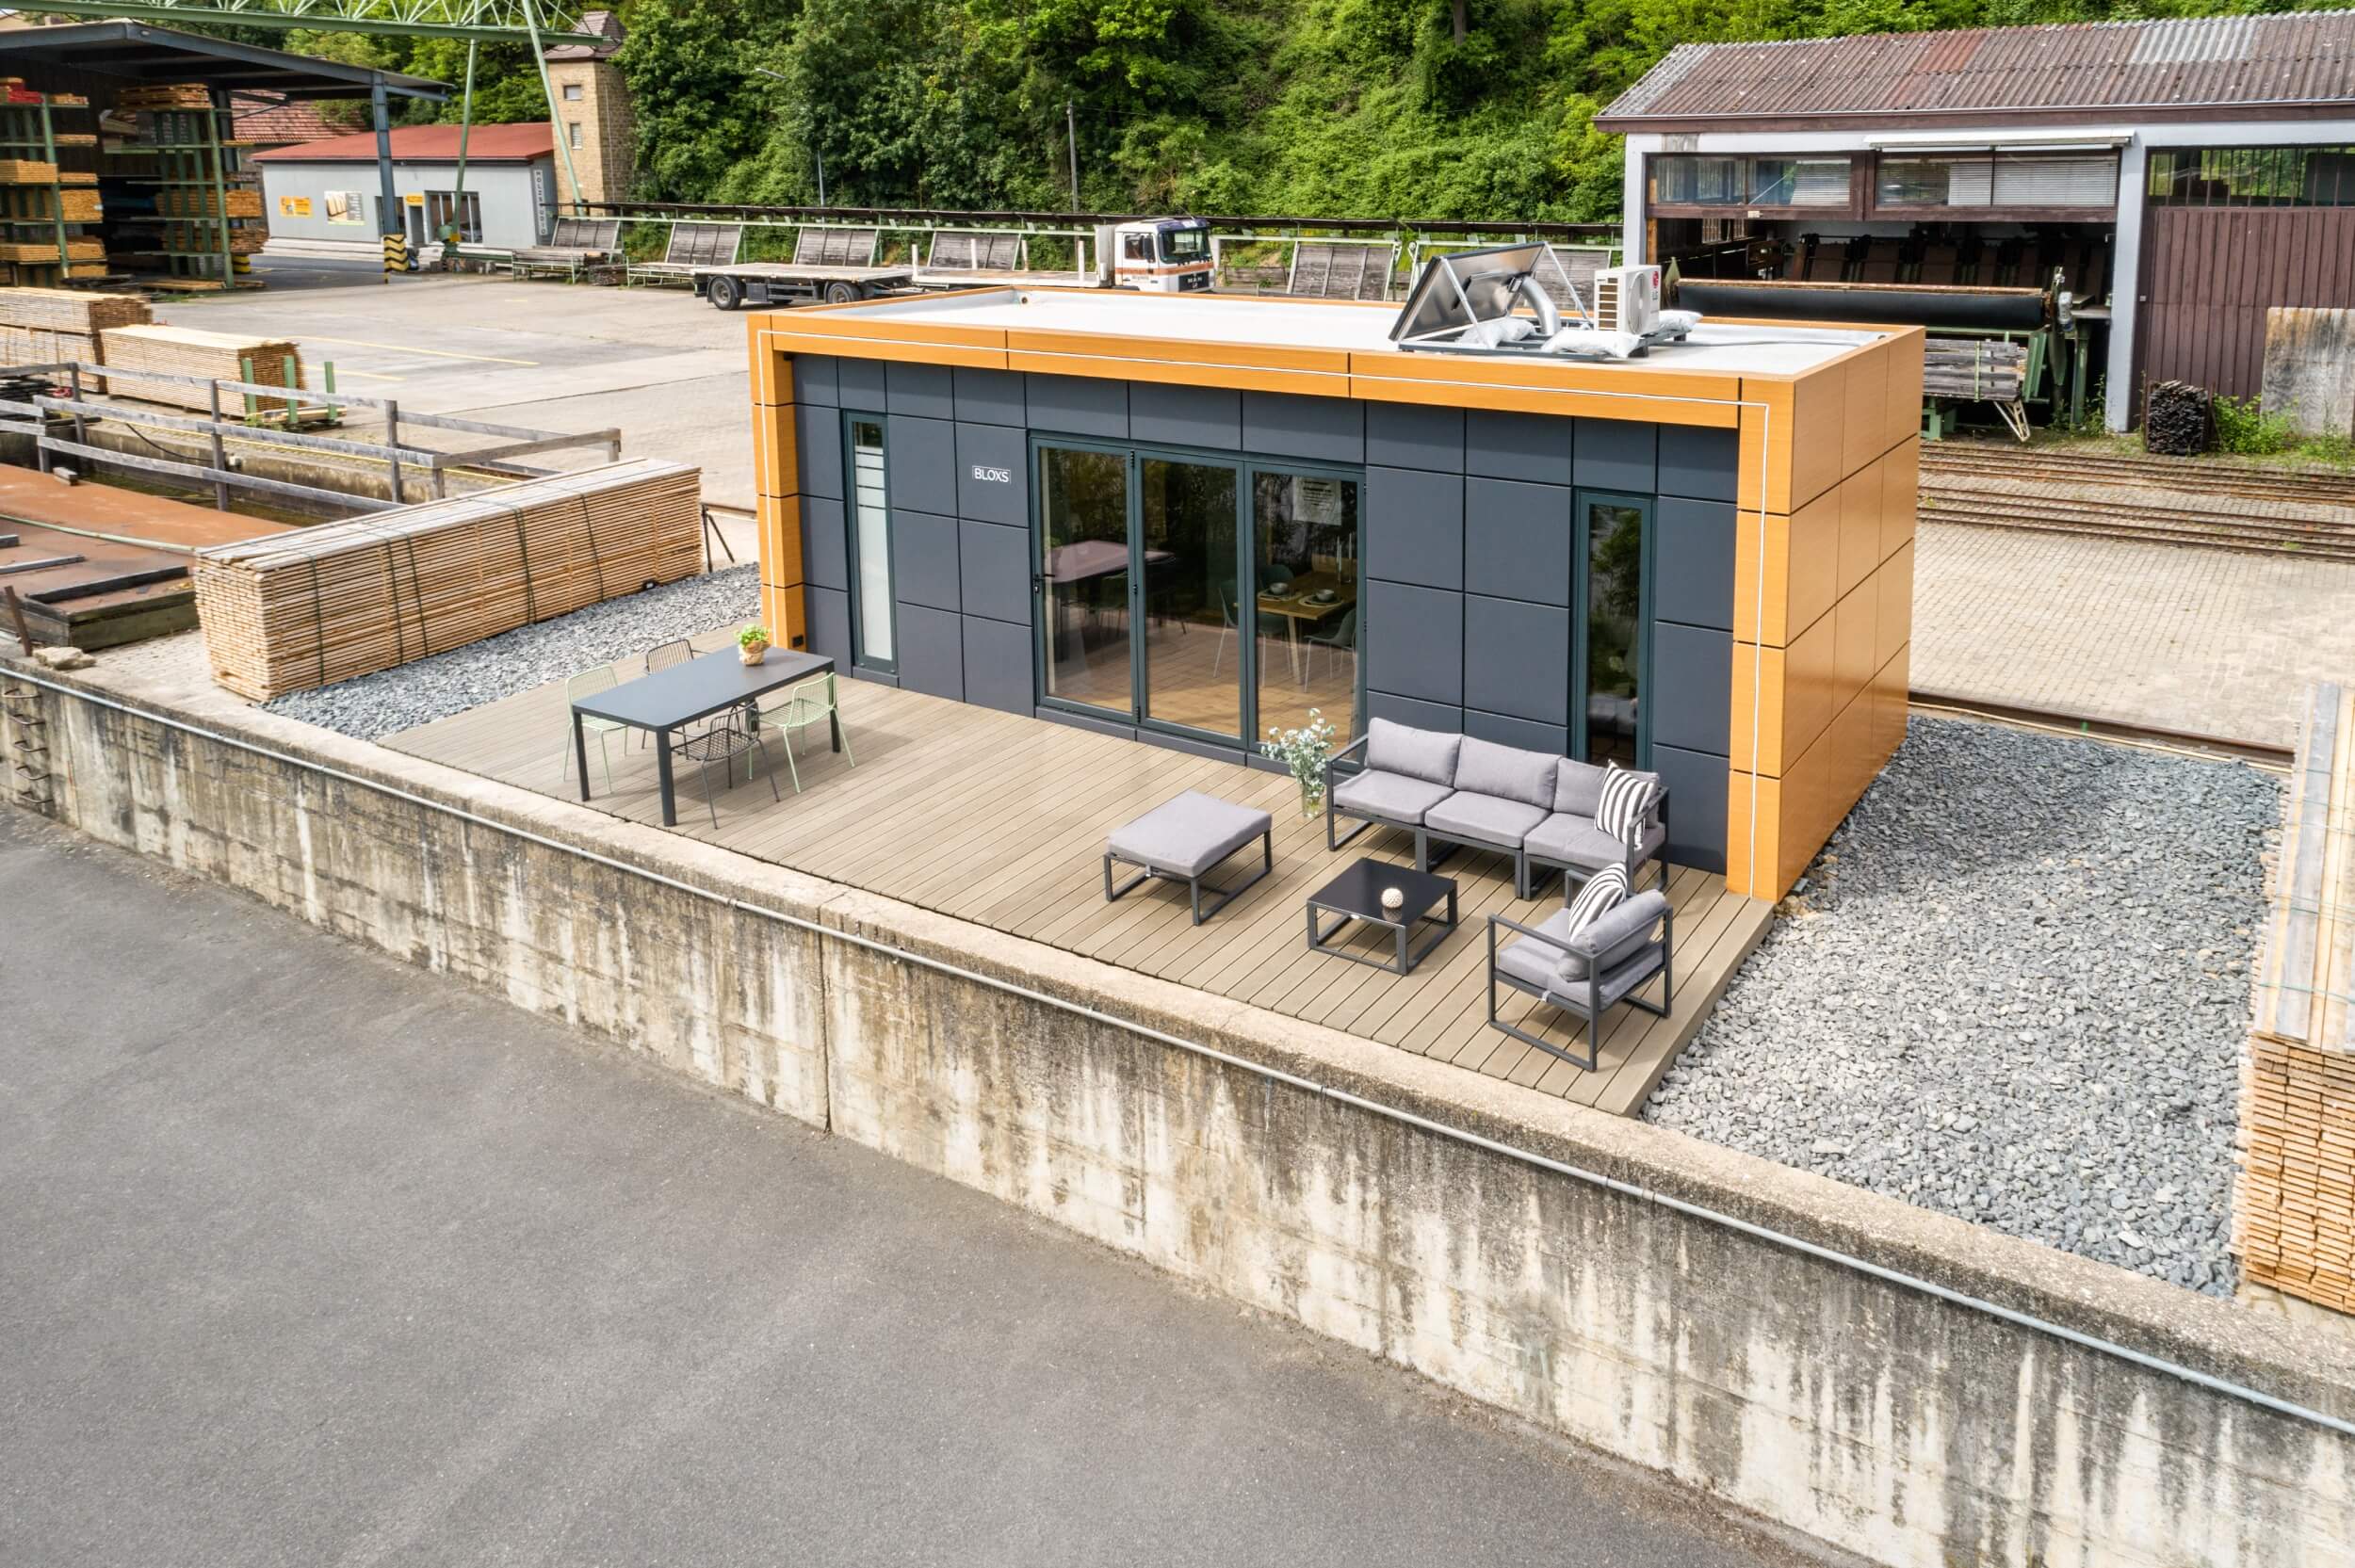 German Manufacturer BLOXS Introduces Smart, Sustainable Modular Tiny Homes